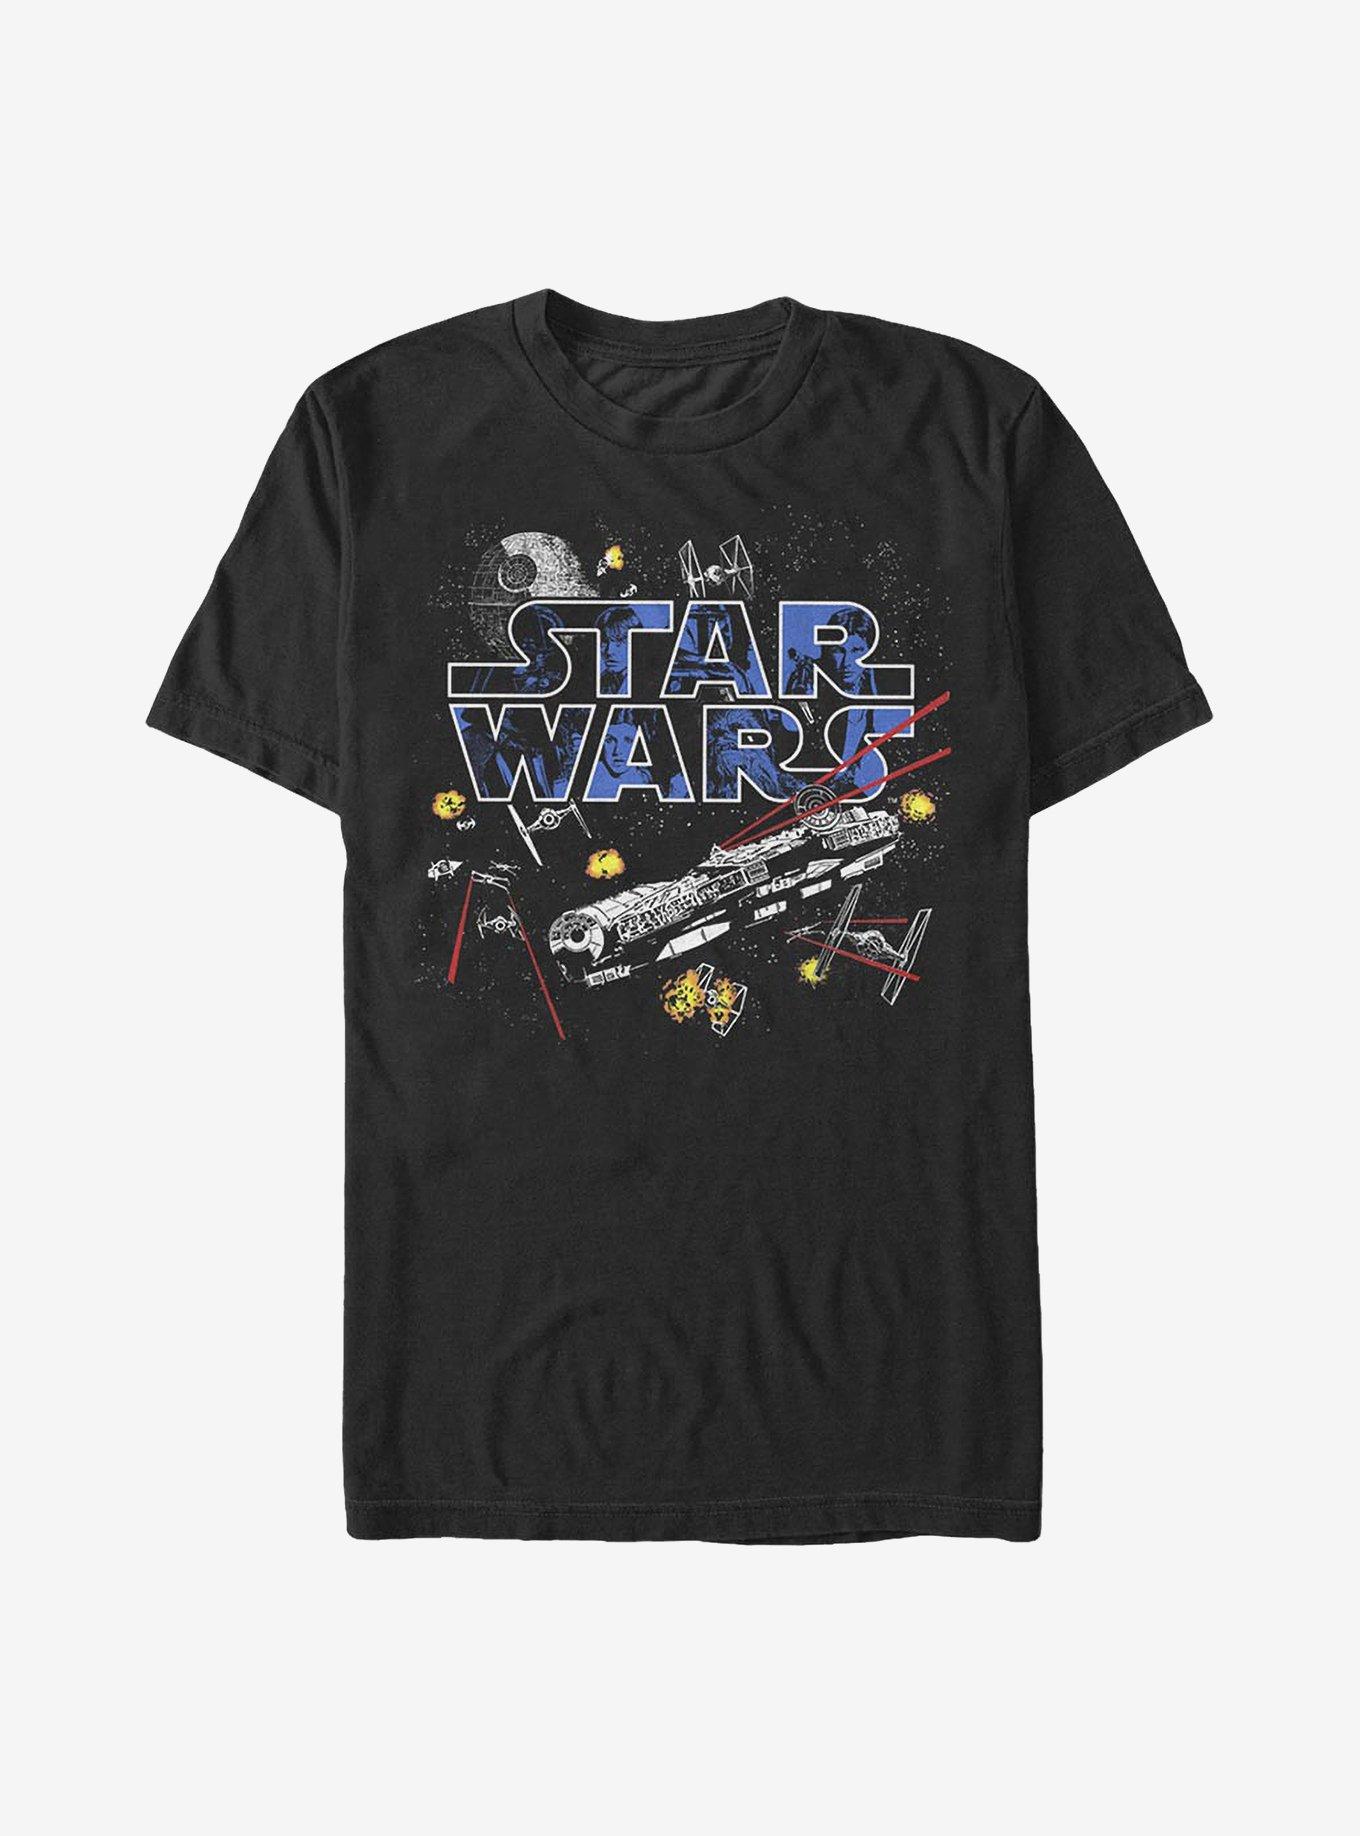 Star Wars Flight Of The Falcon T-Shirt